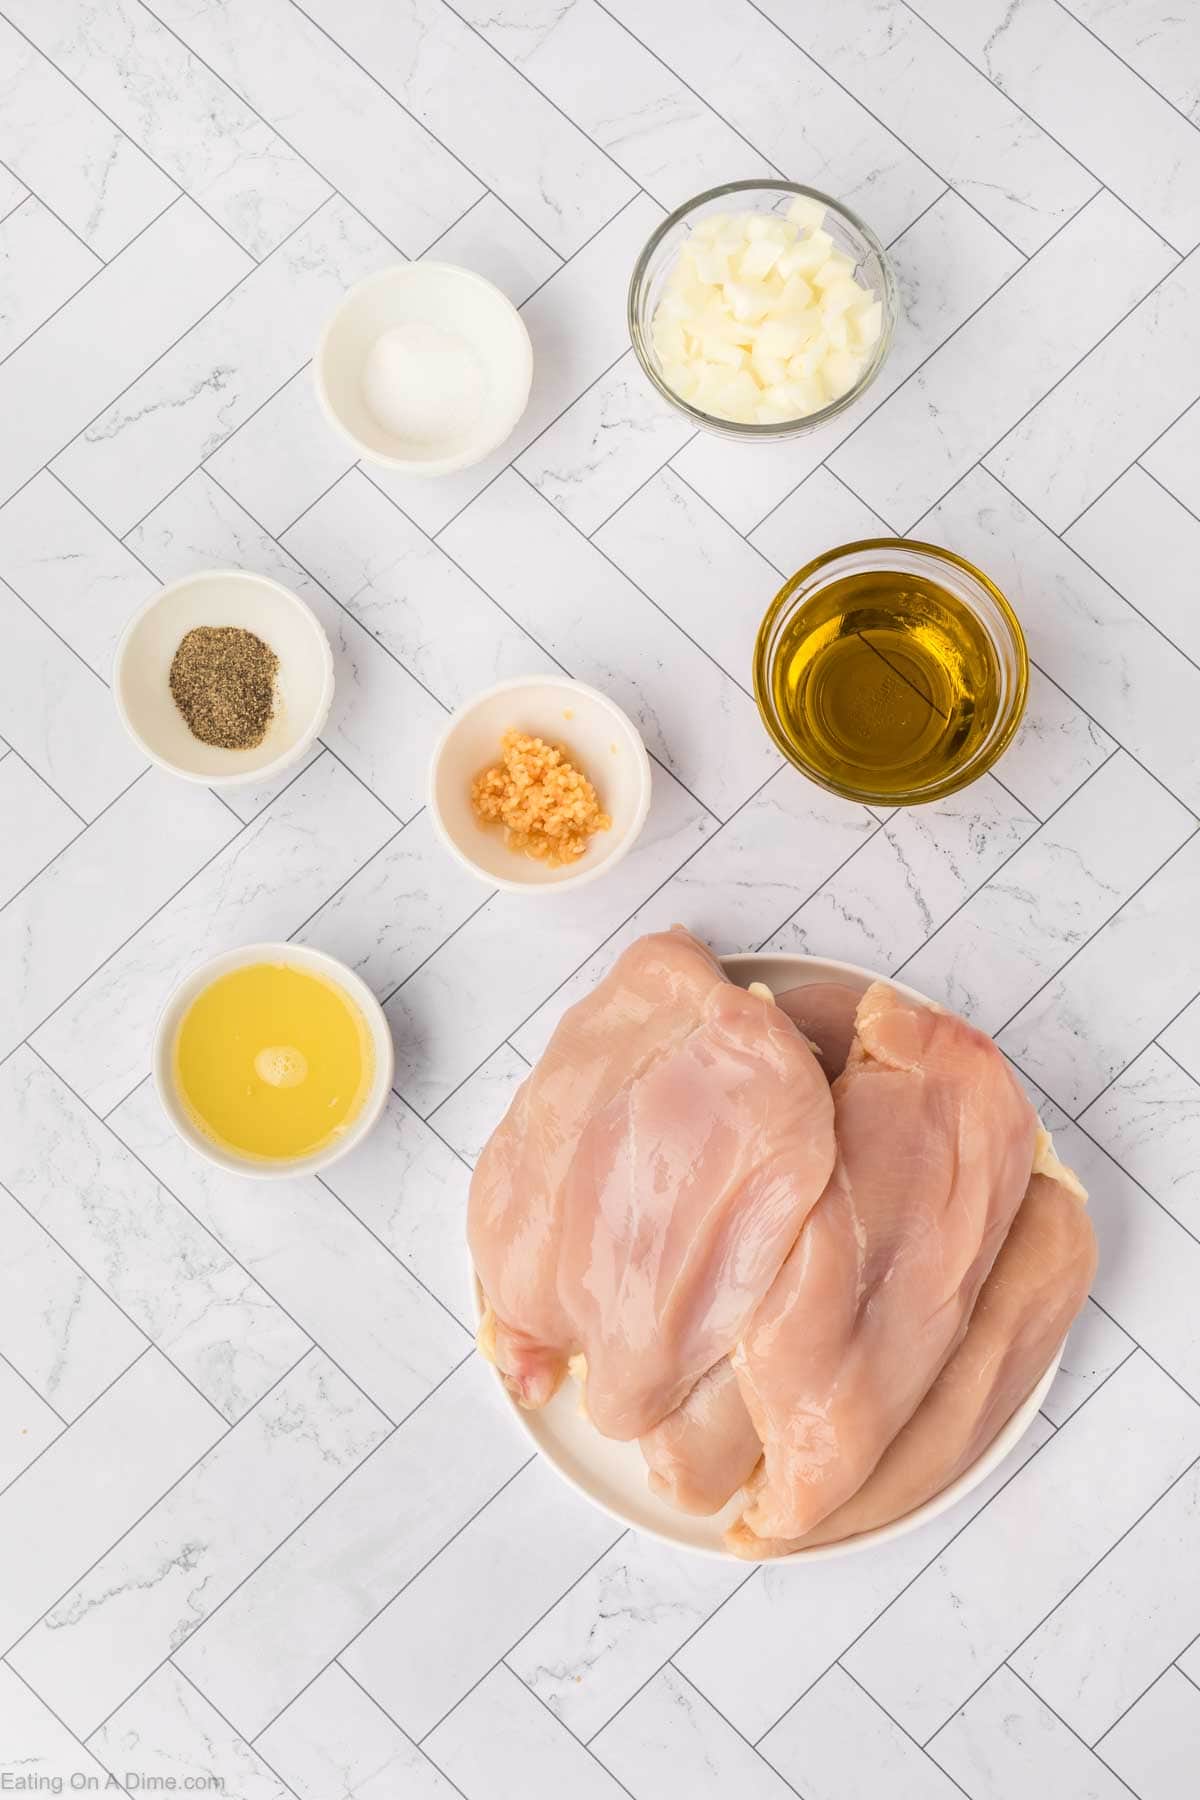 Lemon Chicken ingredients - chicken breast, olive oil, garlic, onion, pepper, salt, lemons